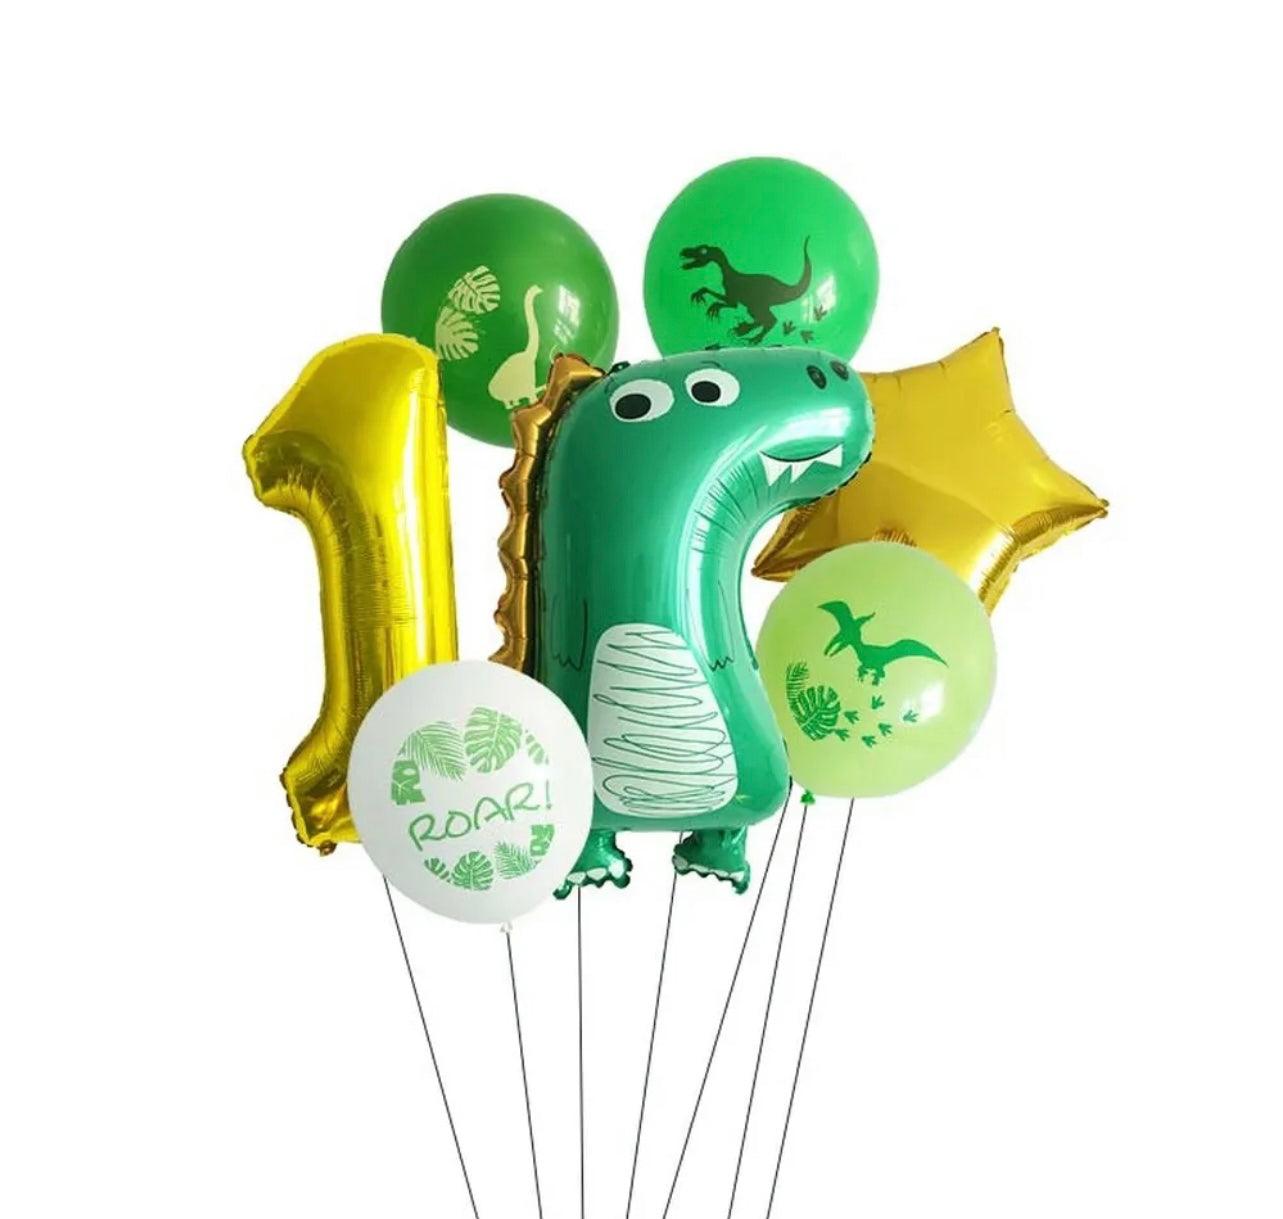 Dinosaur Age Balloons - Expat Life Style